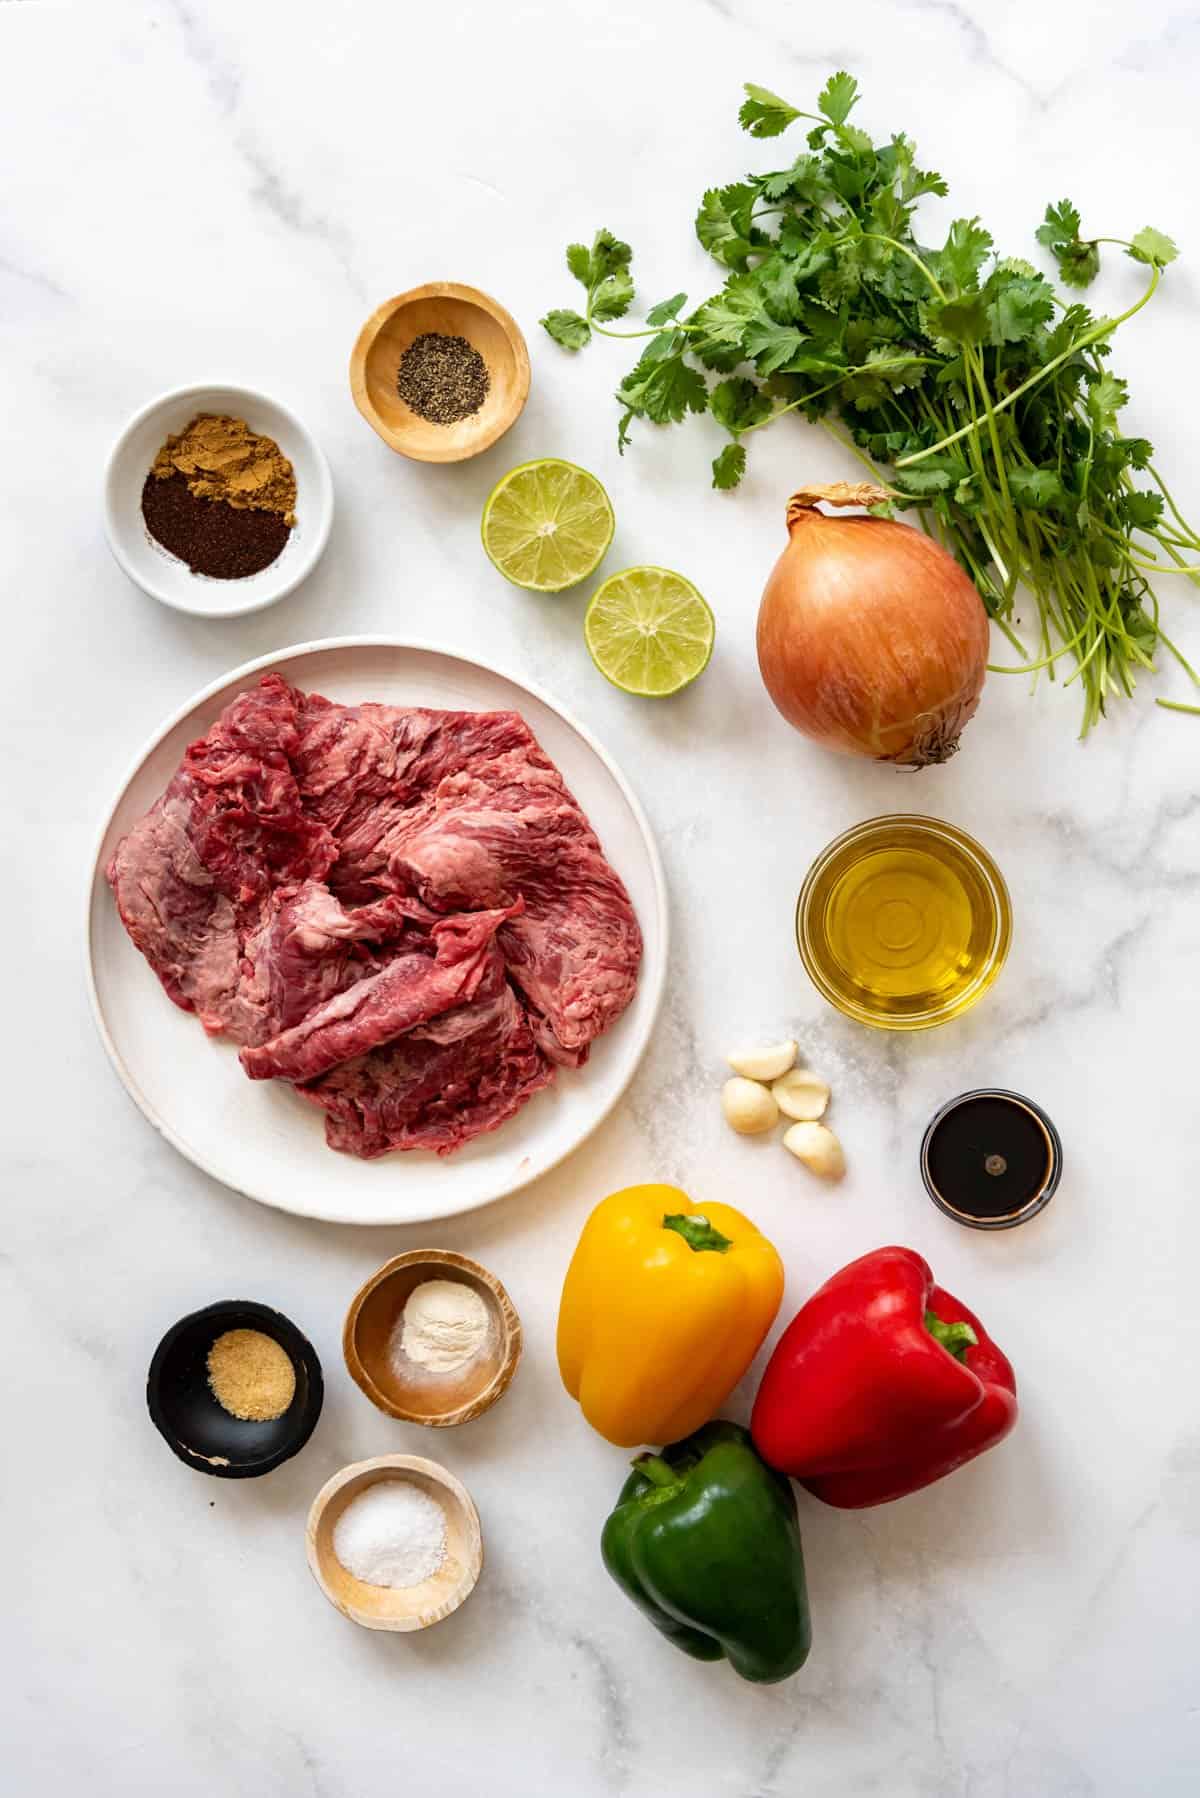 Ingredients for steak fajitas.